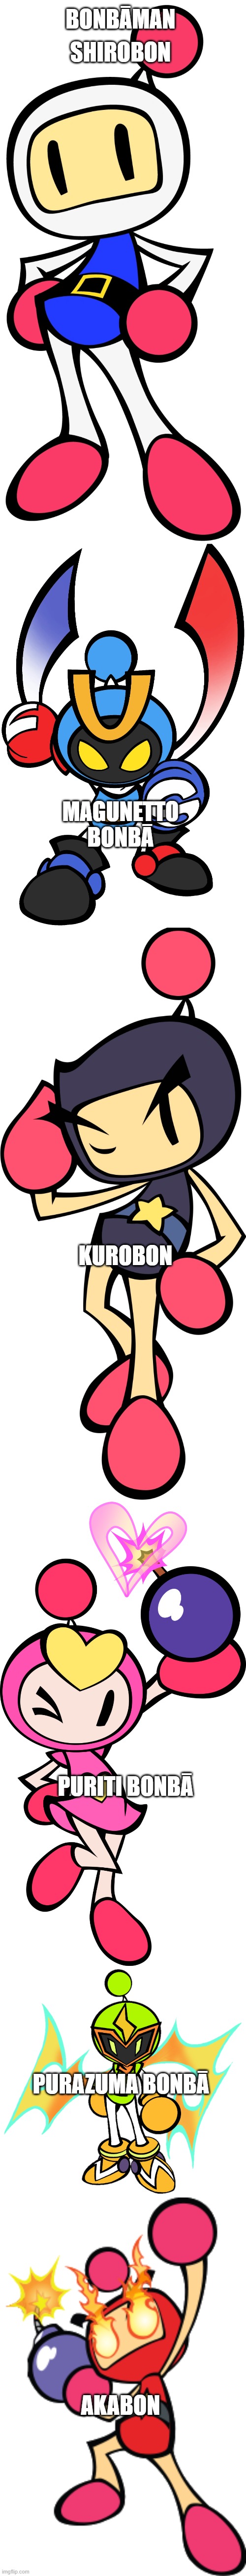 Bomberman names in Japanese! | SHIROBON; BONBĀMAN; MAGUNETTO BONBĀ; KUROBON; PURITI BONBĀ; PURAZUMA BONBĀ; AKABON | image tagged in bomberman,japanese,memes | made w/ Imgflip meme maker